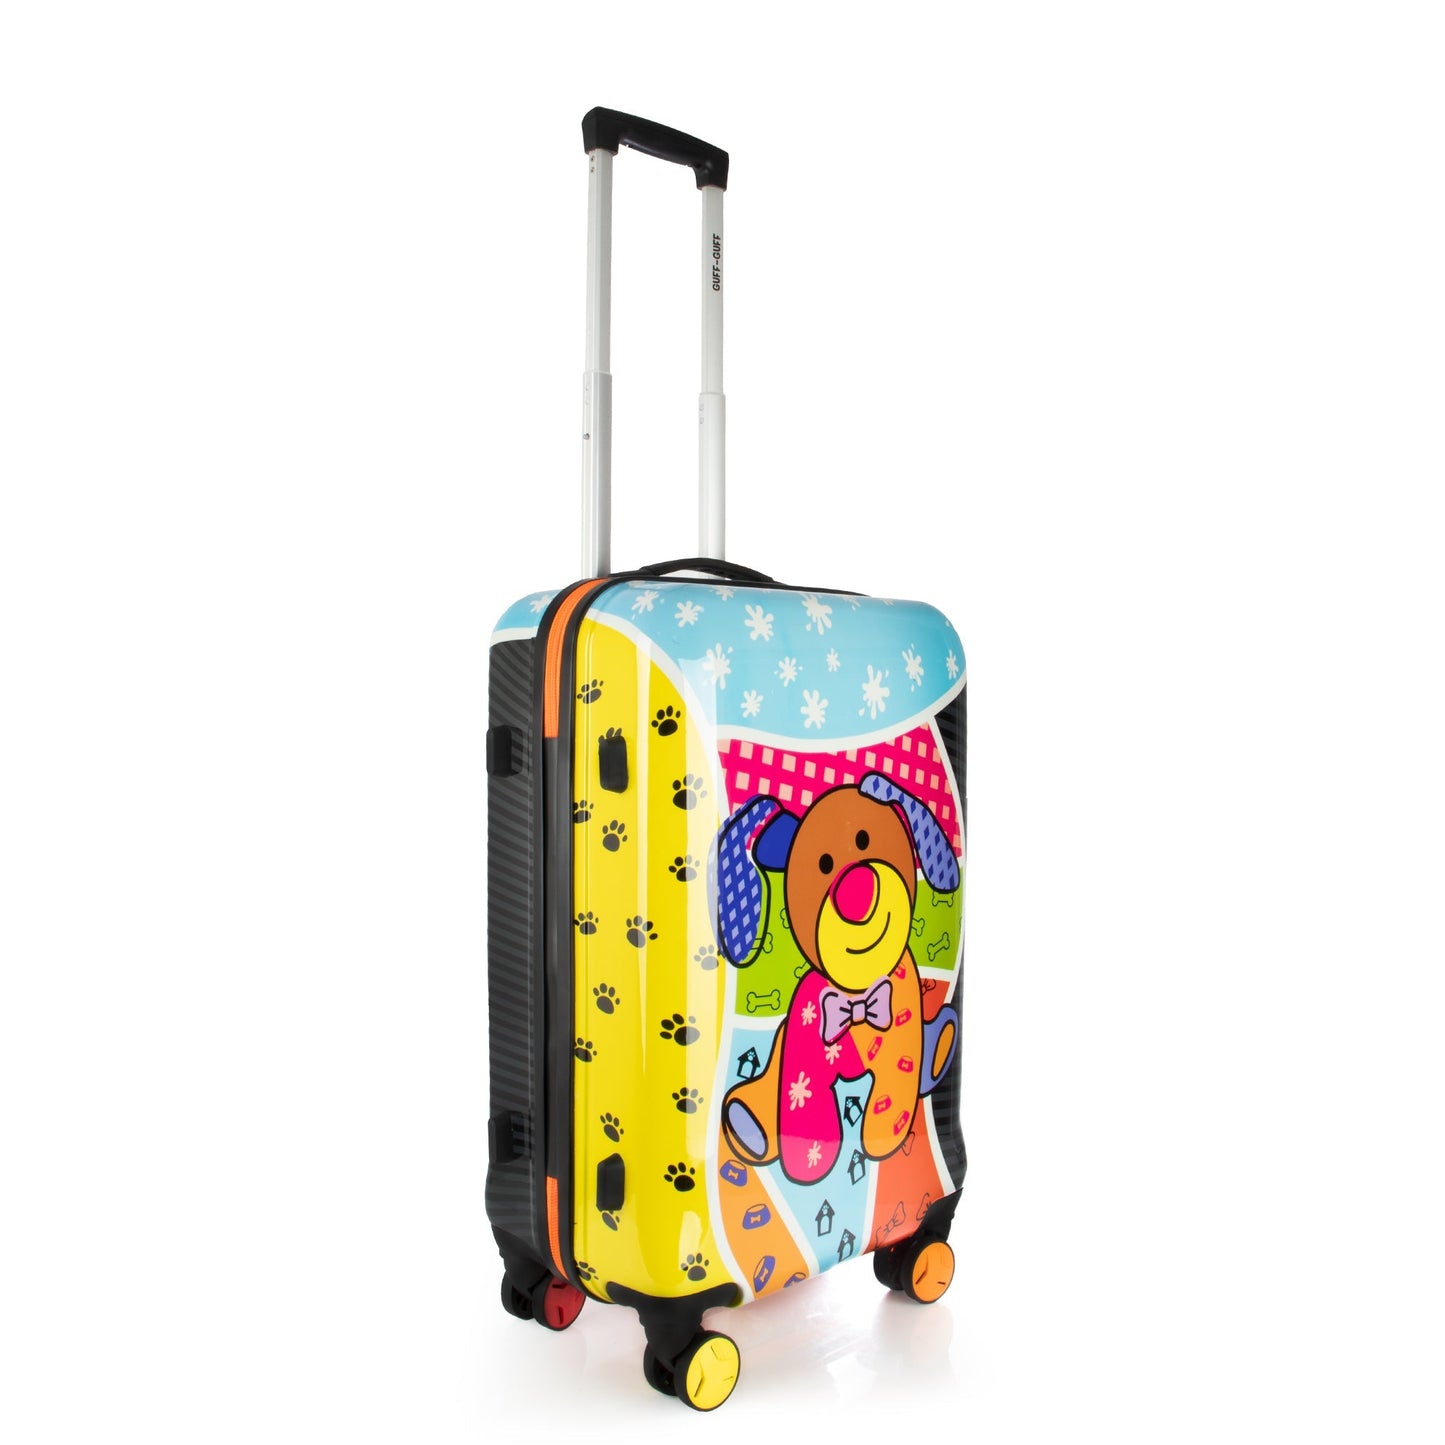 GUFF - GUFF Collection Rainbow Luggage 4-piece set w/ beauty case